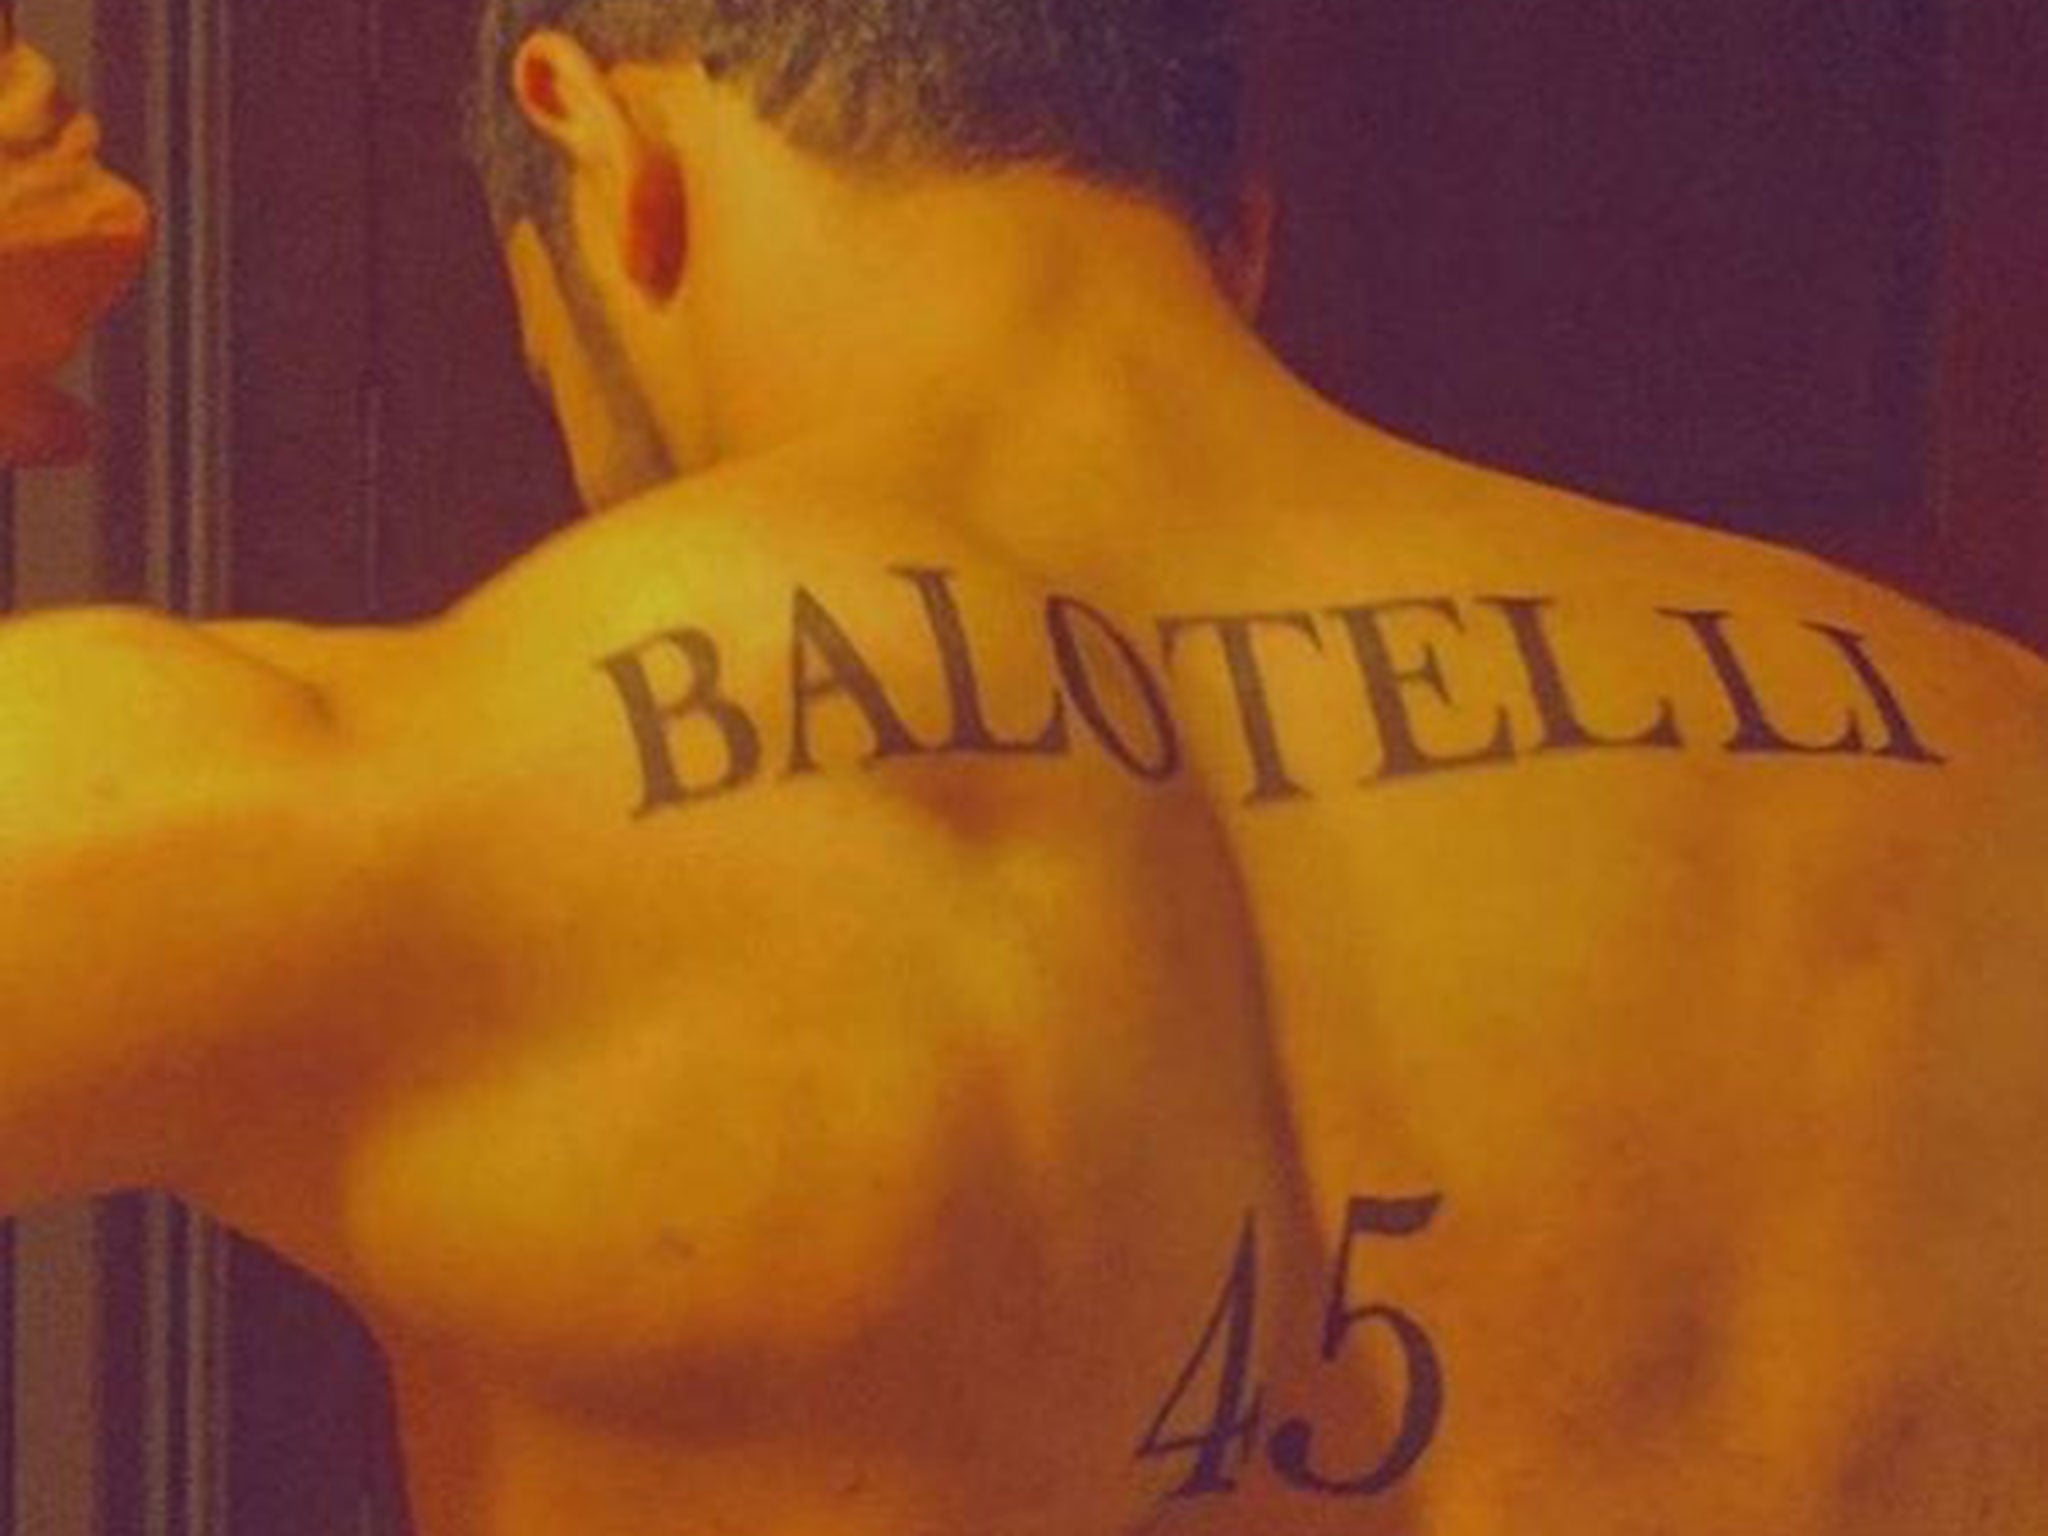 A football fan has had Mario Balotelli's surname tattooed onto his back